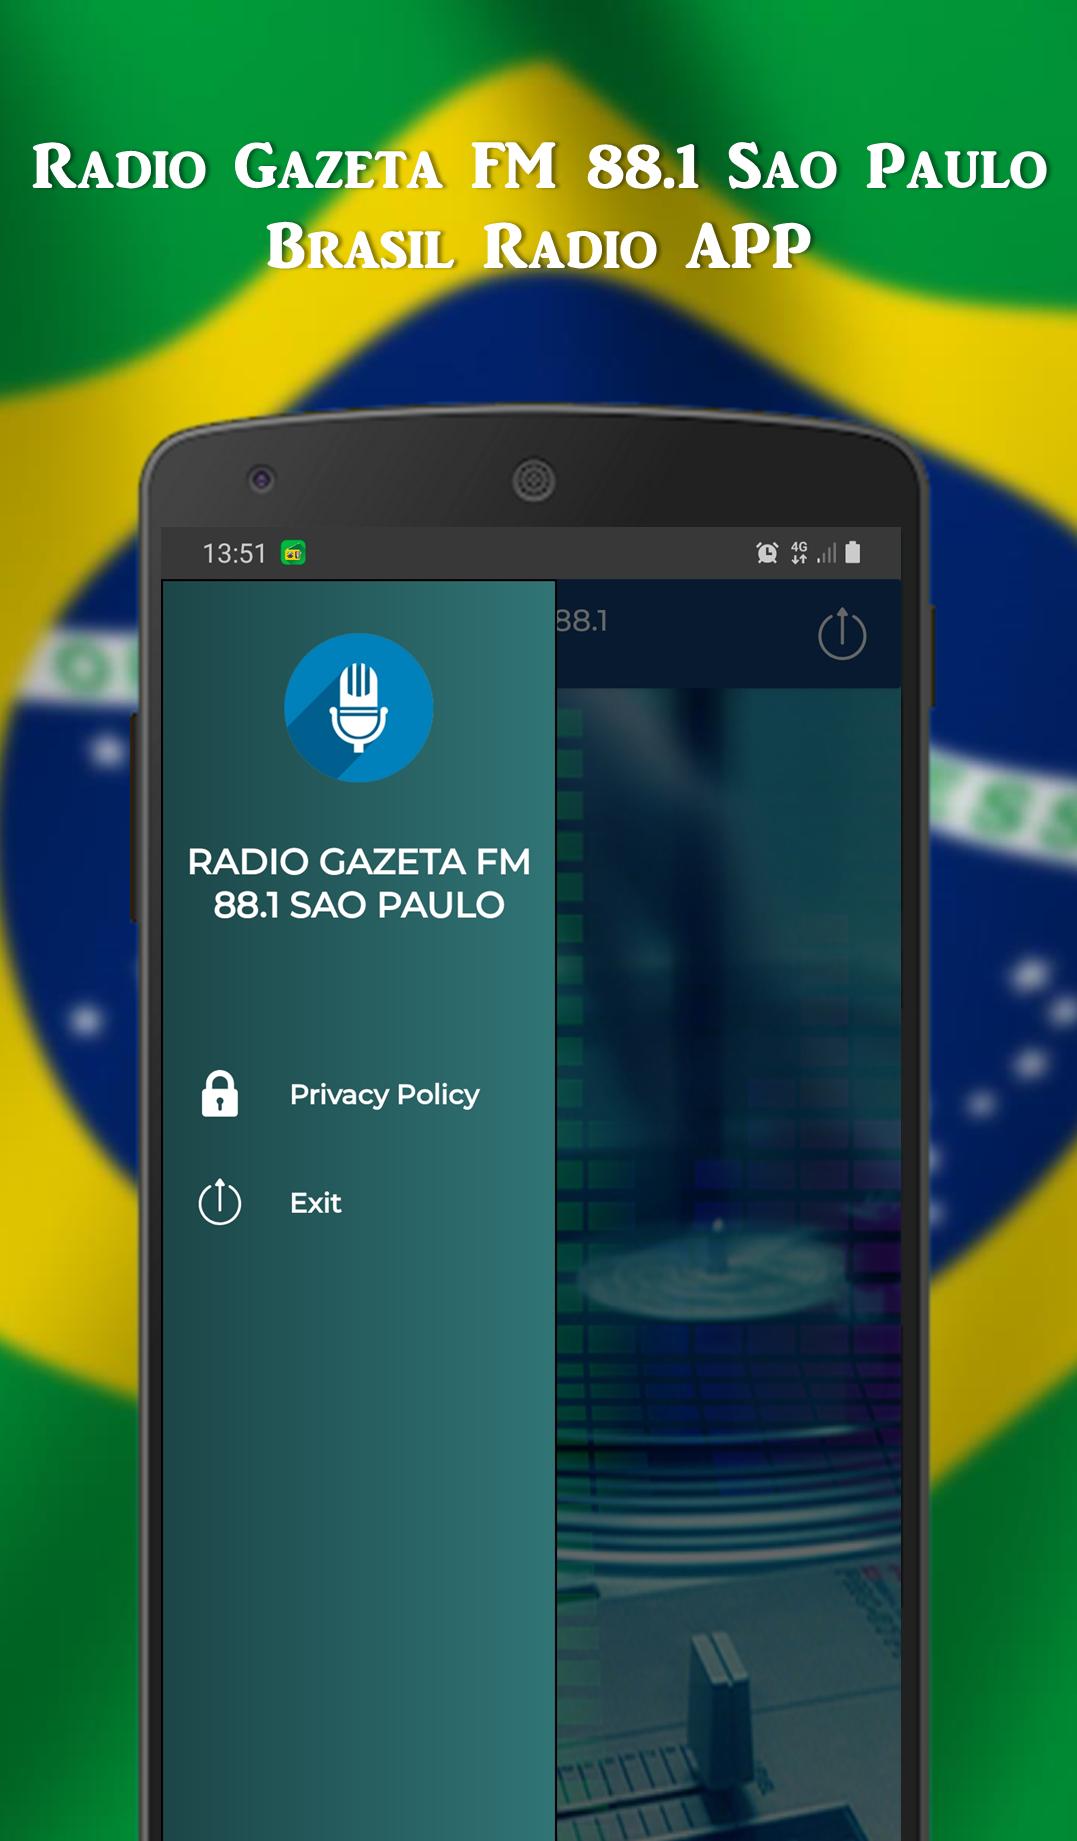 Radio Gazeta FM 88.1 Sao Paulo for Android - APK Download